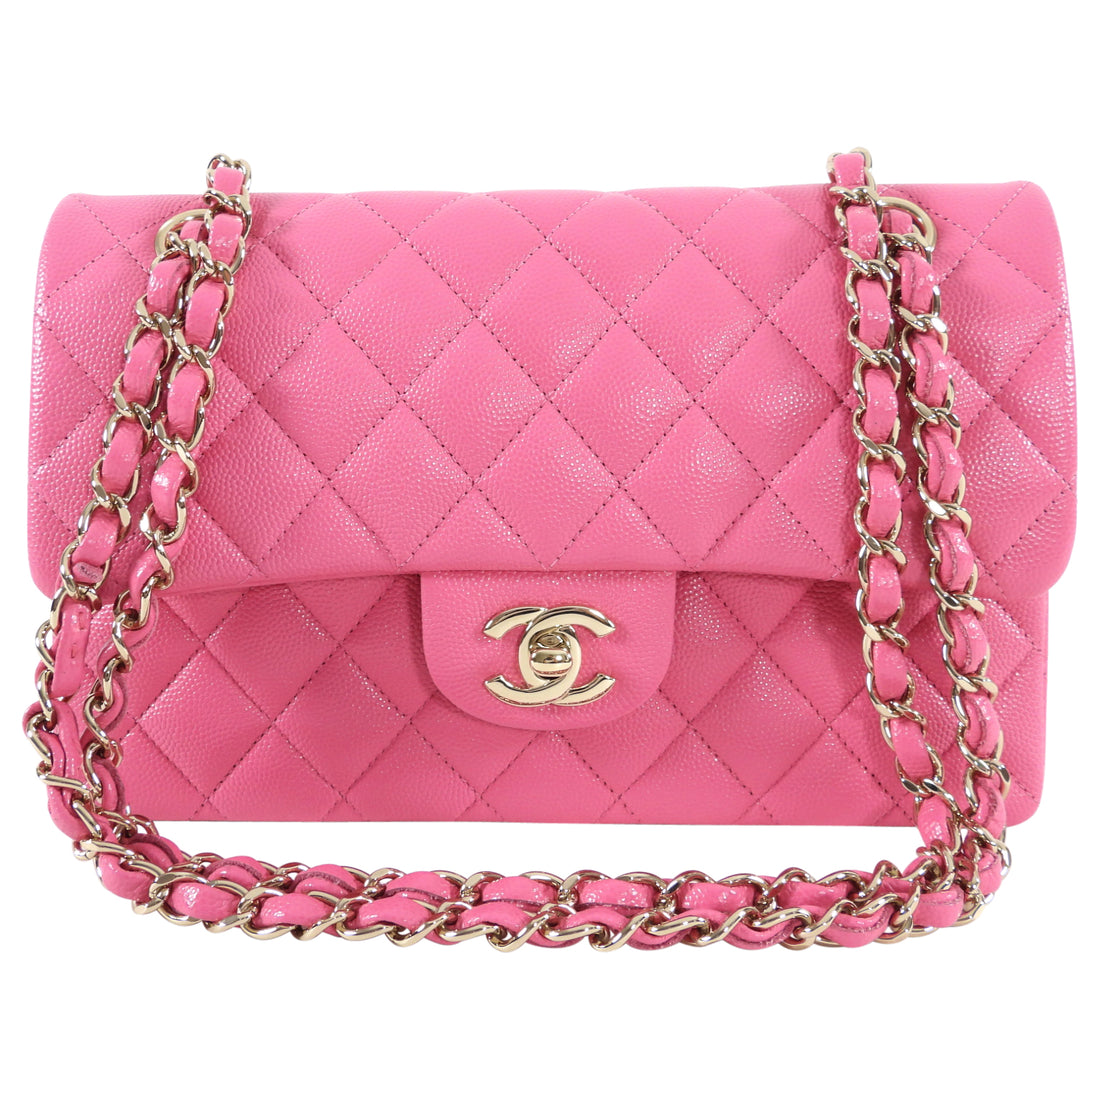 Mini flap bag Shiny lambskin  lacquered metal light green light pink  pink  green  Fashion  CHANEL